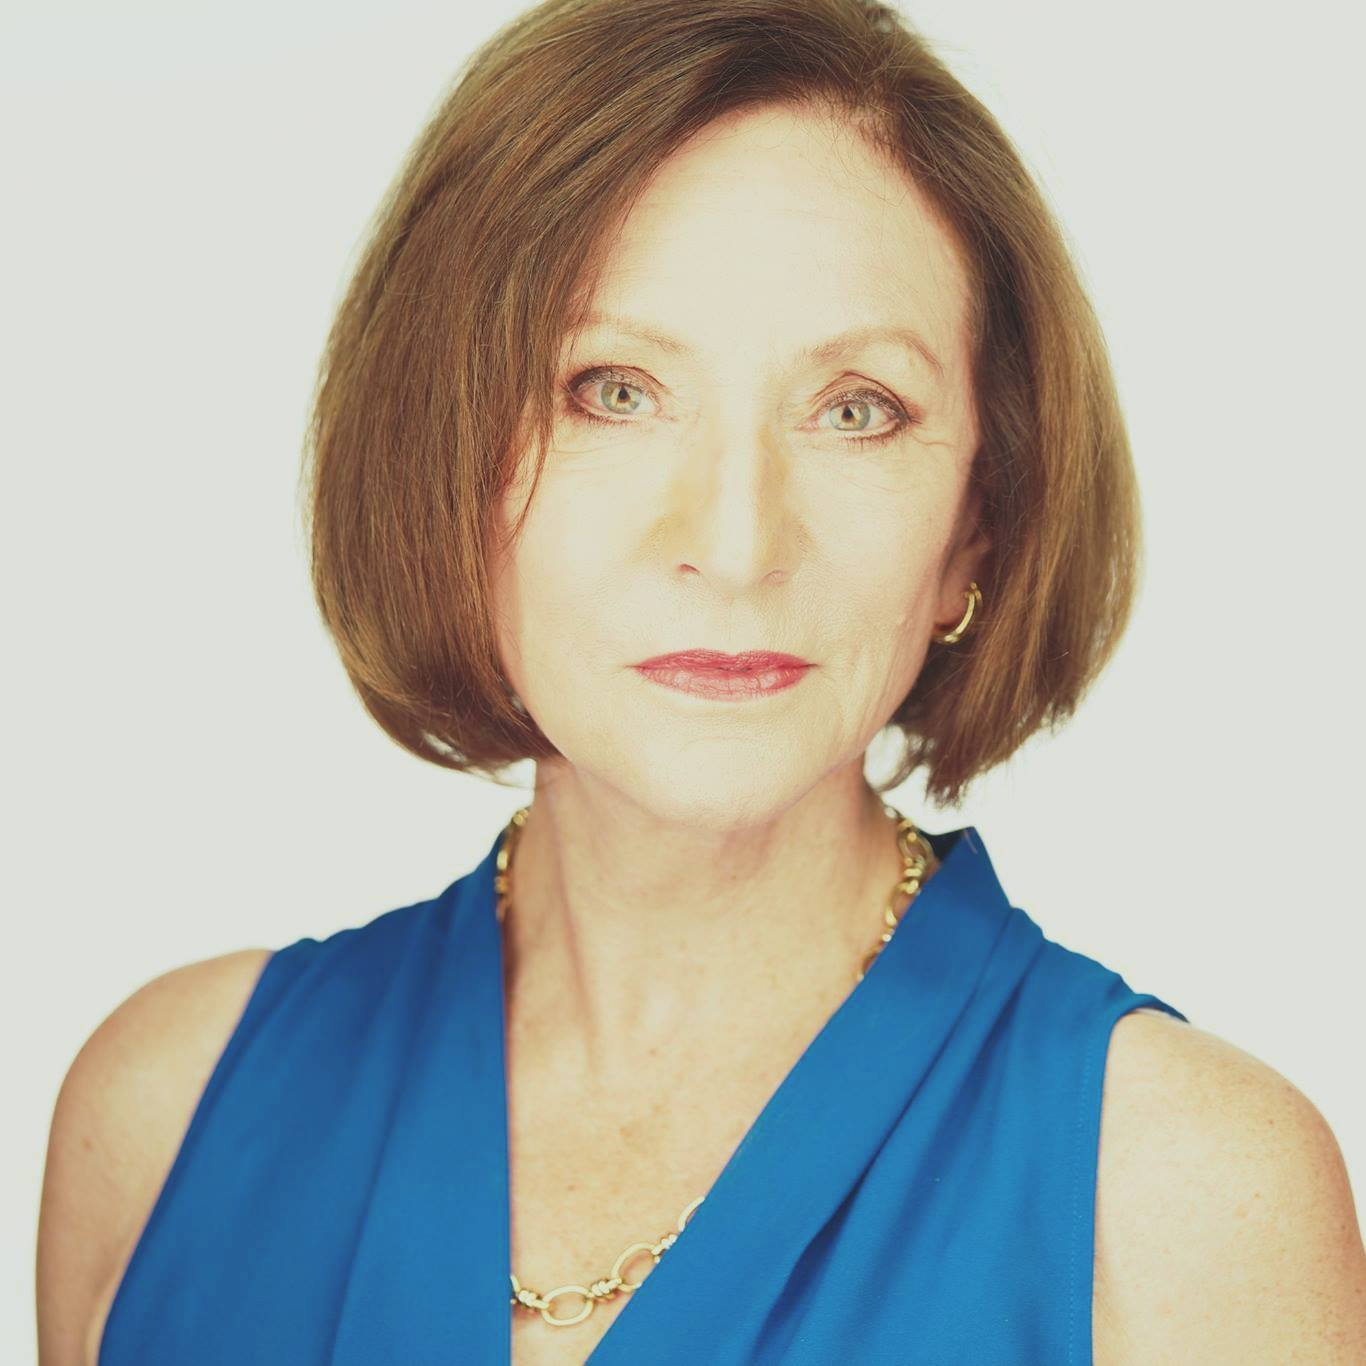 Author Gretchen Rose'